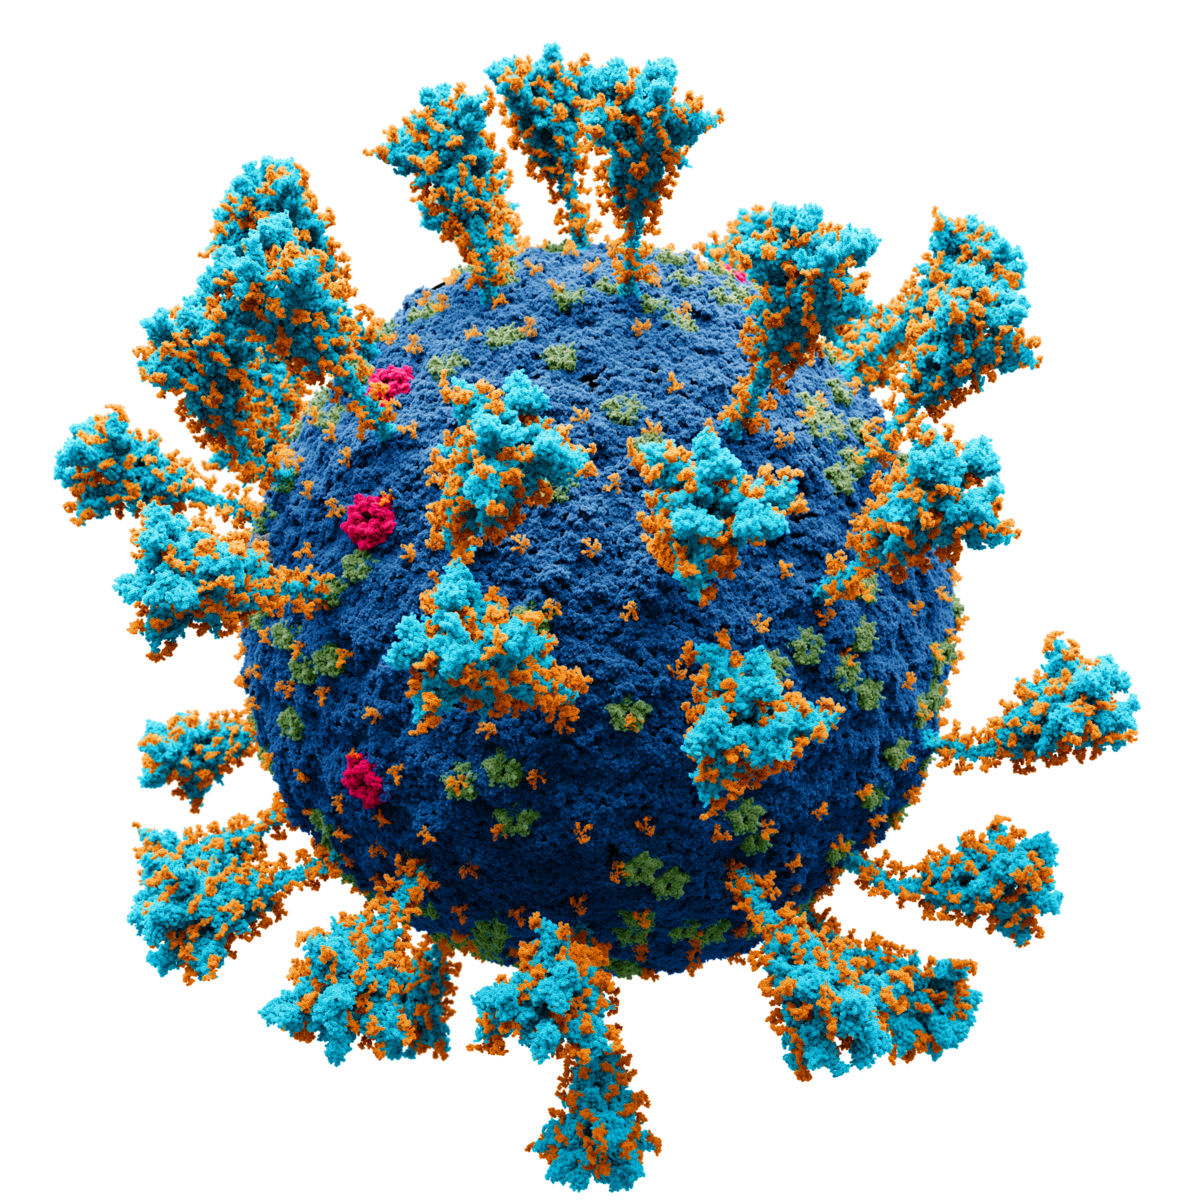 https://commons.wikimedia.org/wiki/File:Coronavirus._SARS-CoV-2.png